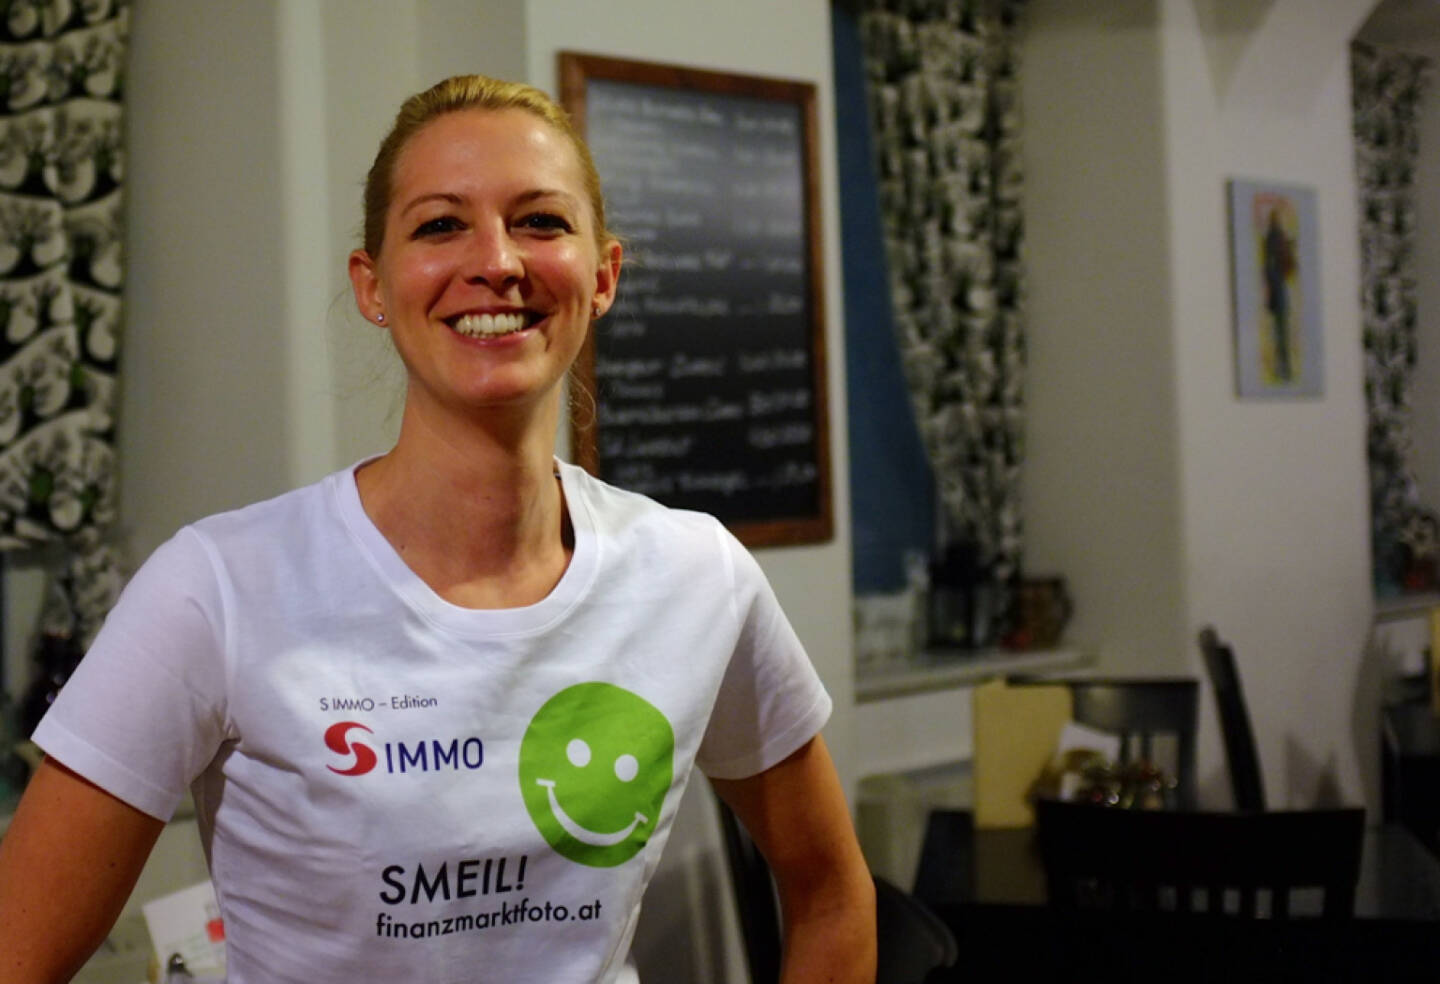 Nina Bergmann, finanzen.at (Smeil-Shirt in der S Immo-Kollektion)